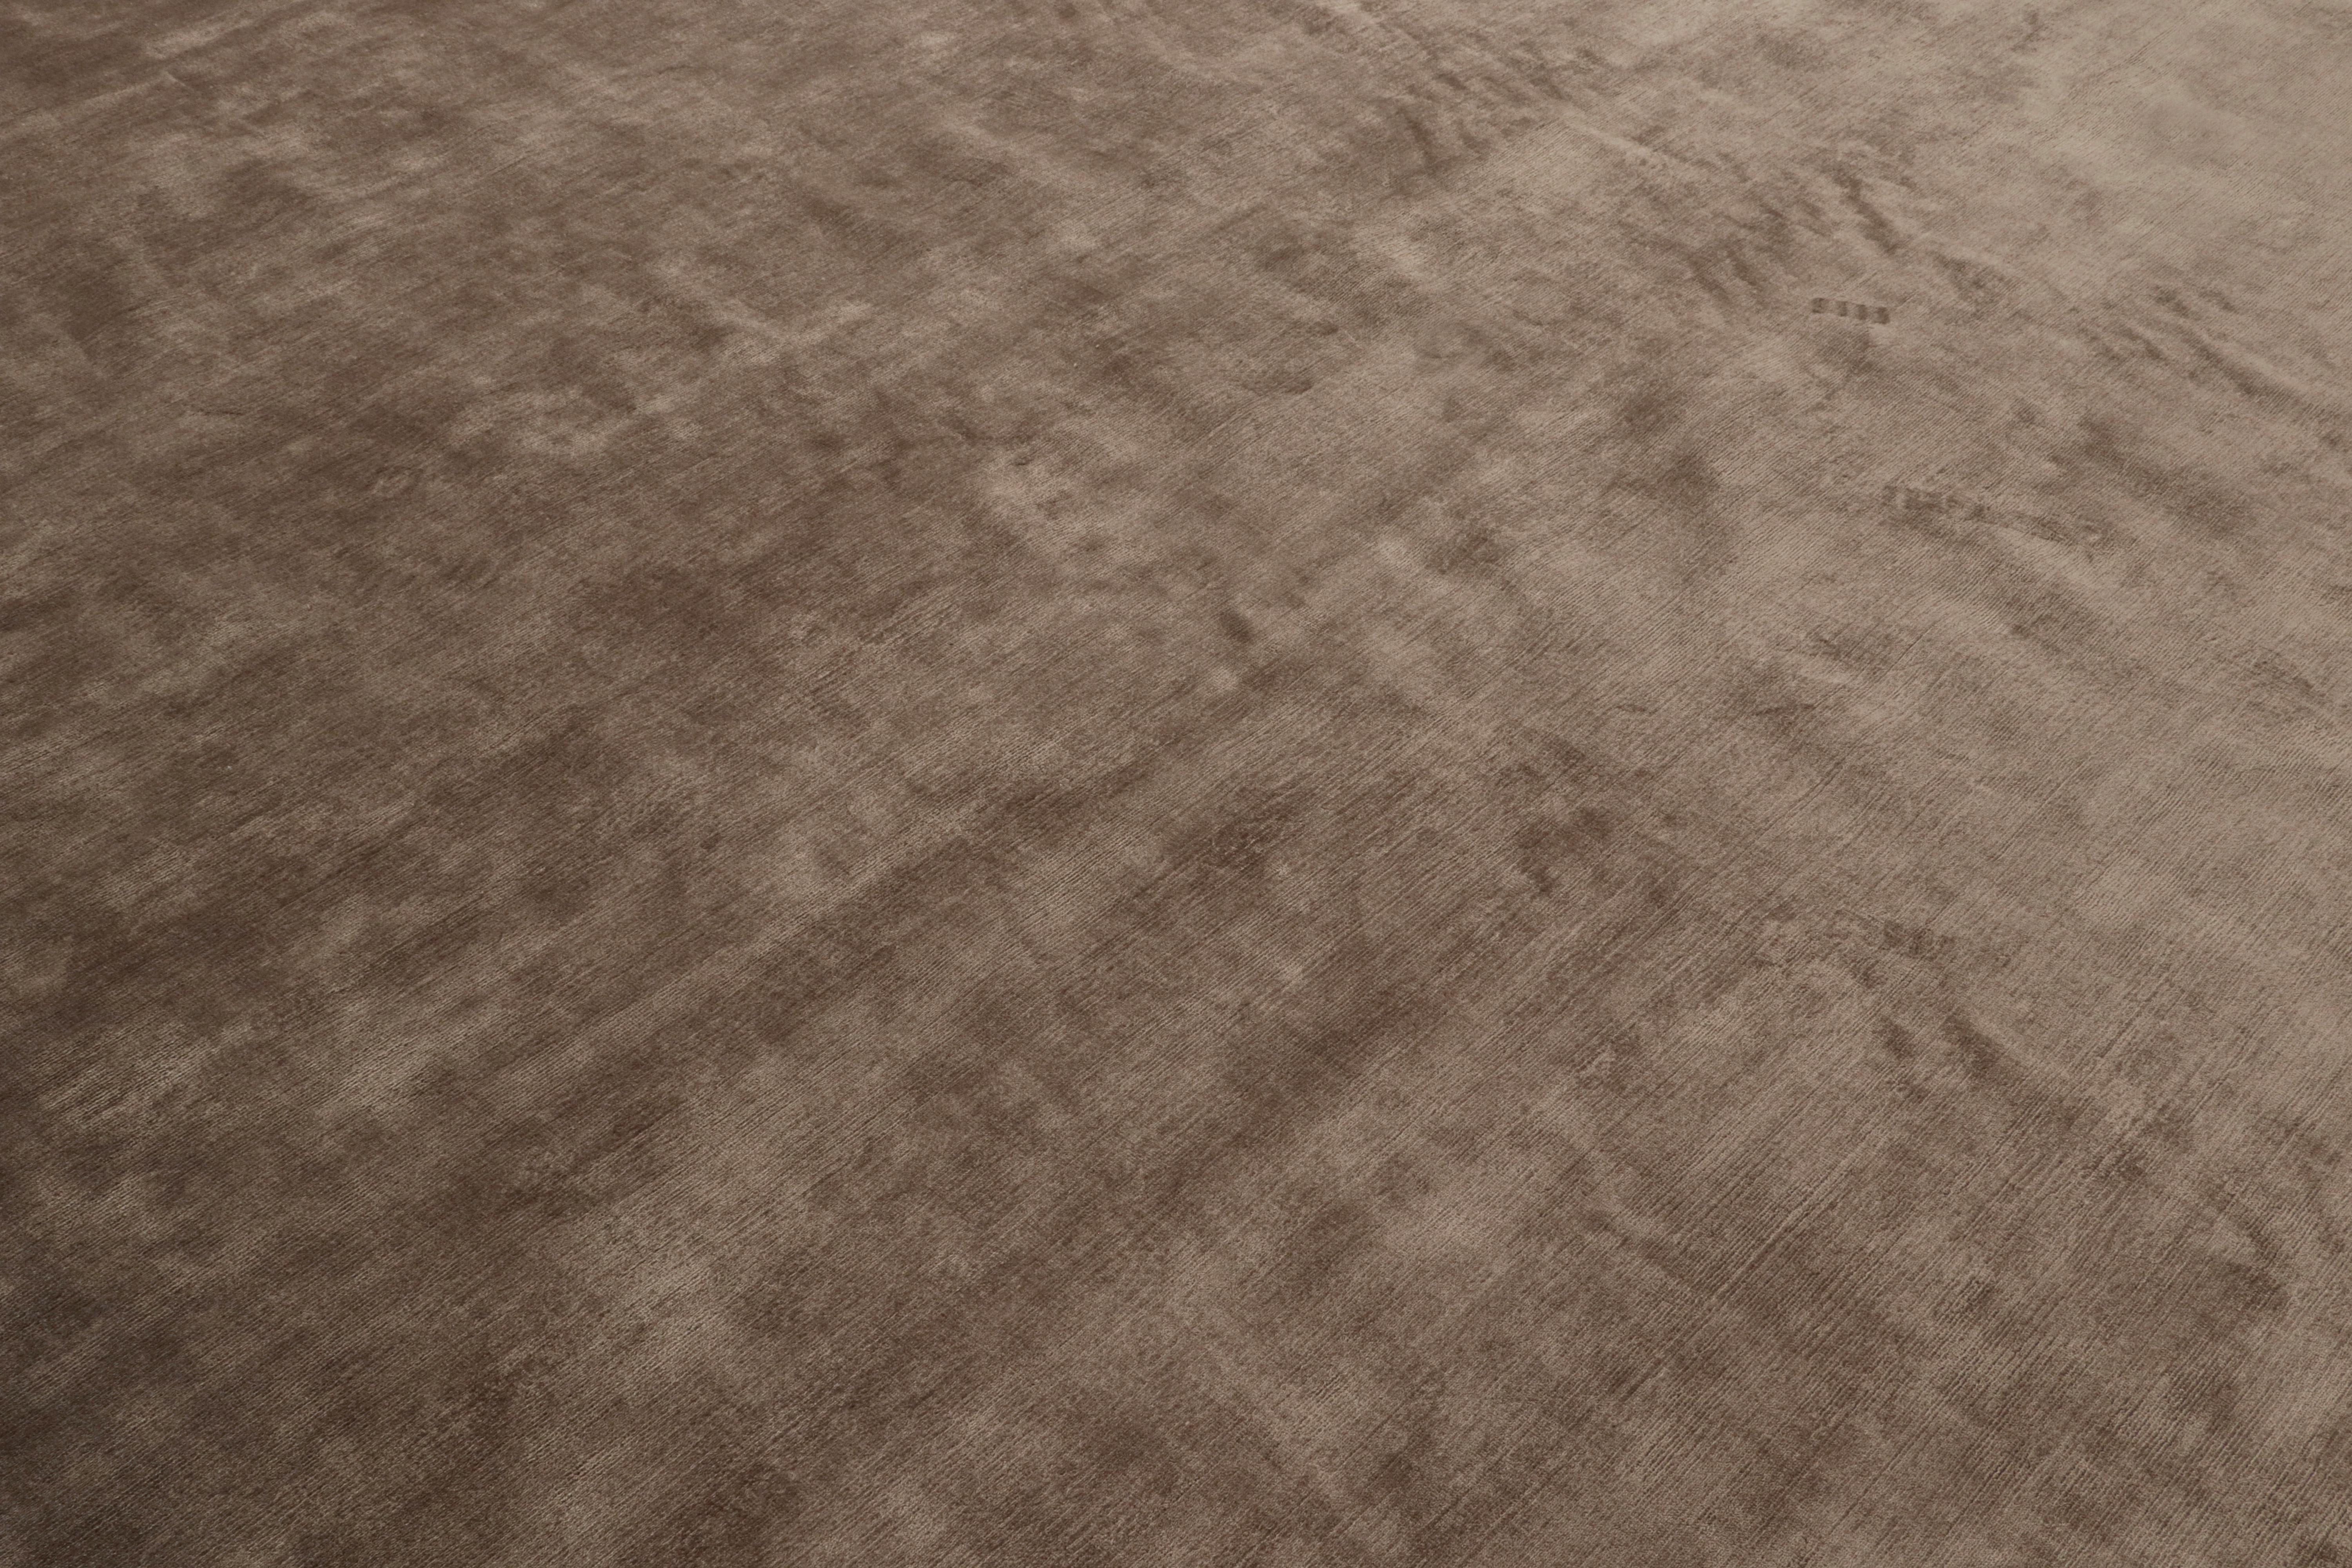 Noué à la main Rug & Kilim's Custom Modernity rug in Solid Brown (tapis moderne sur mesure en brun uni) en vente